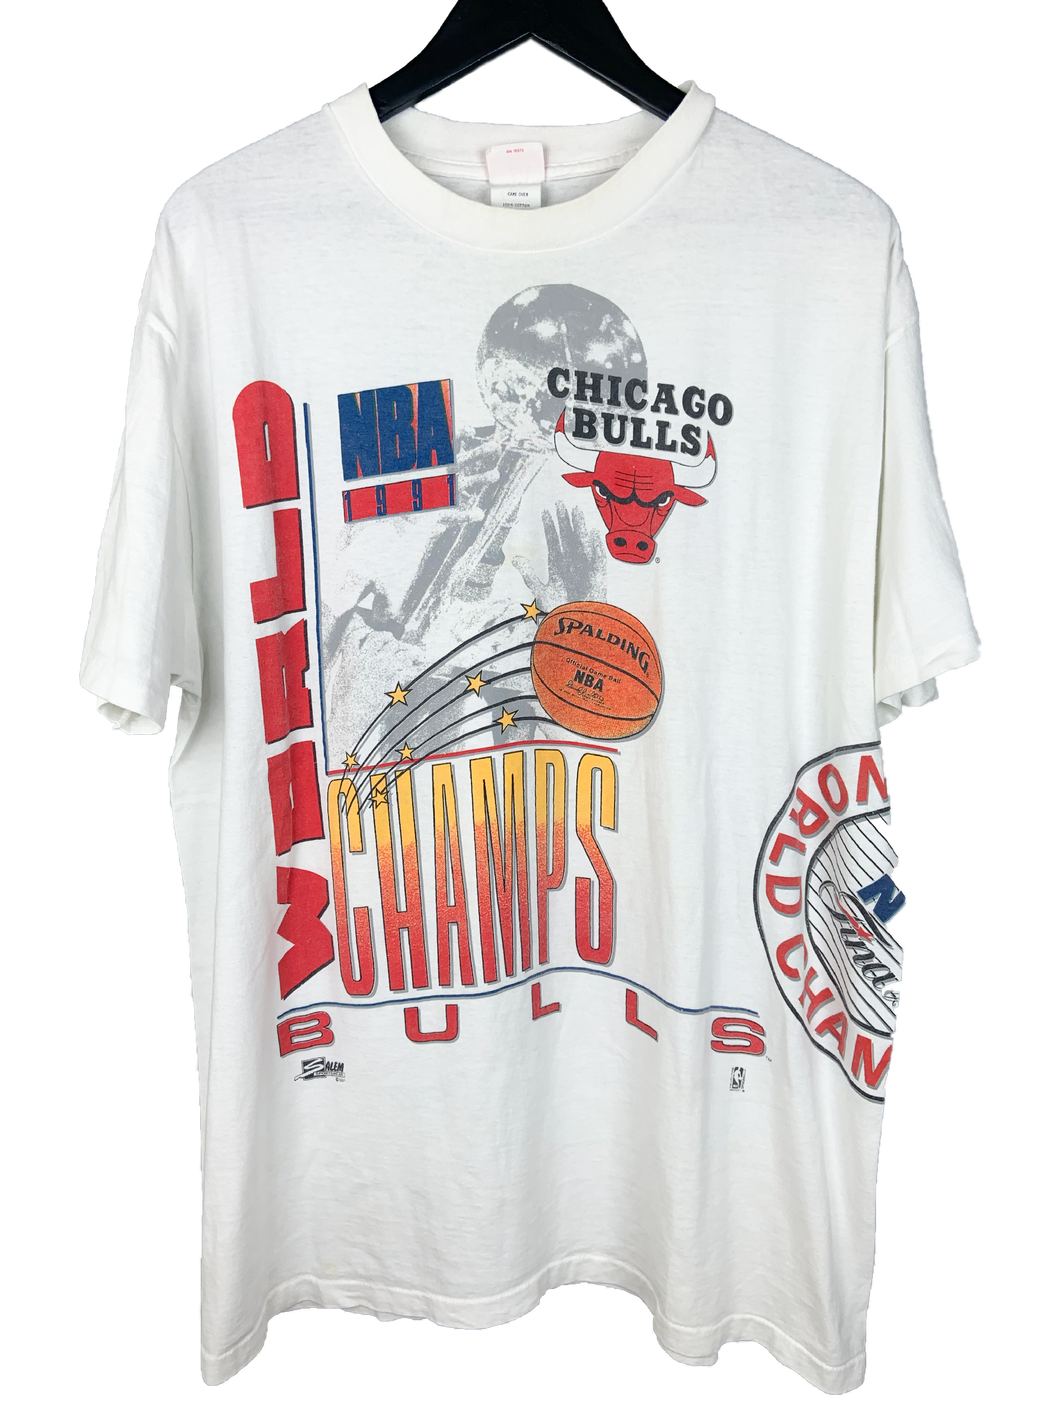 1991 CHICAGO BULLS WORLD CHAMPS 'SS' TEE - XL